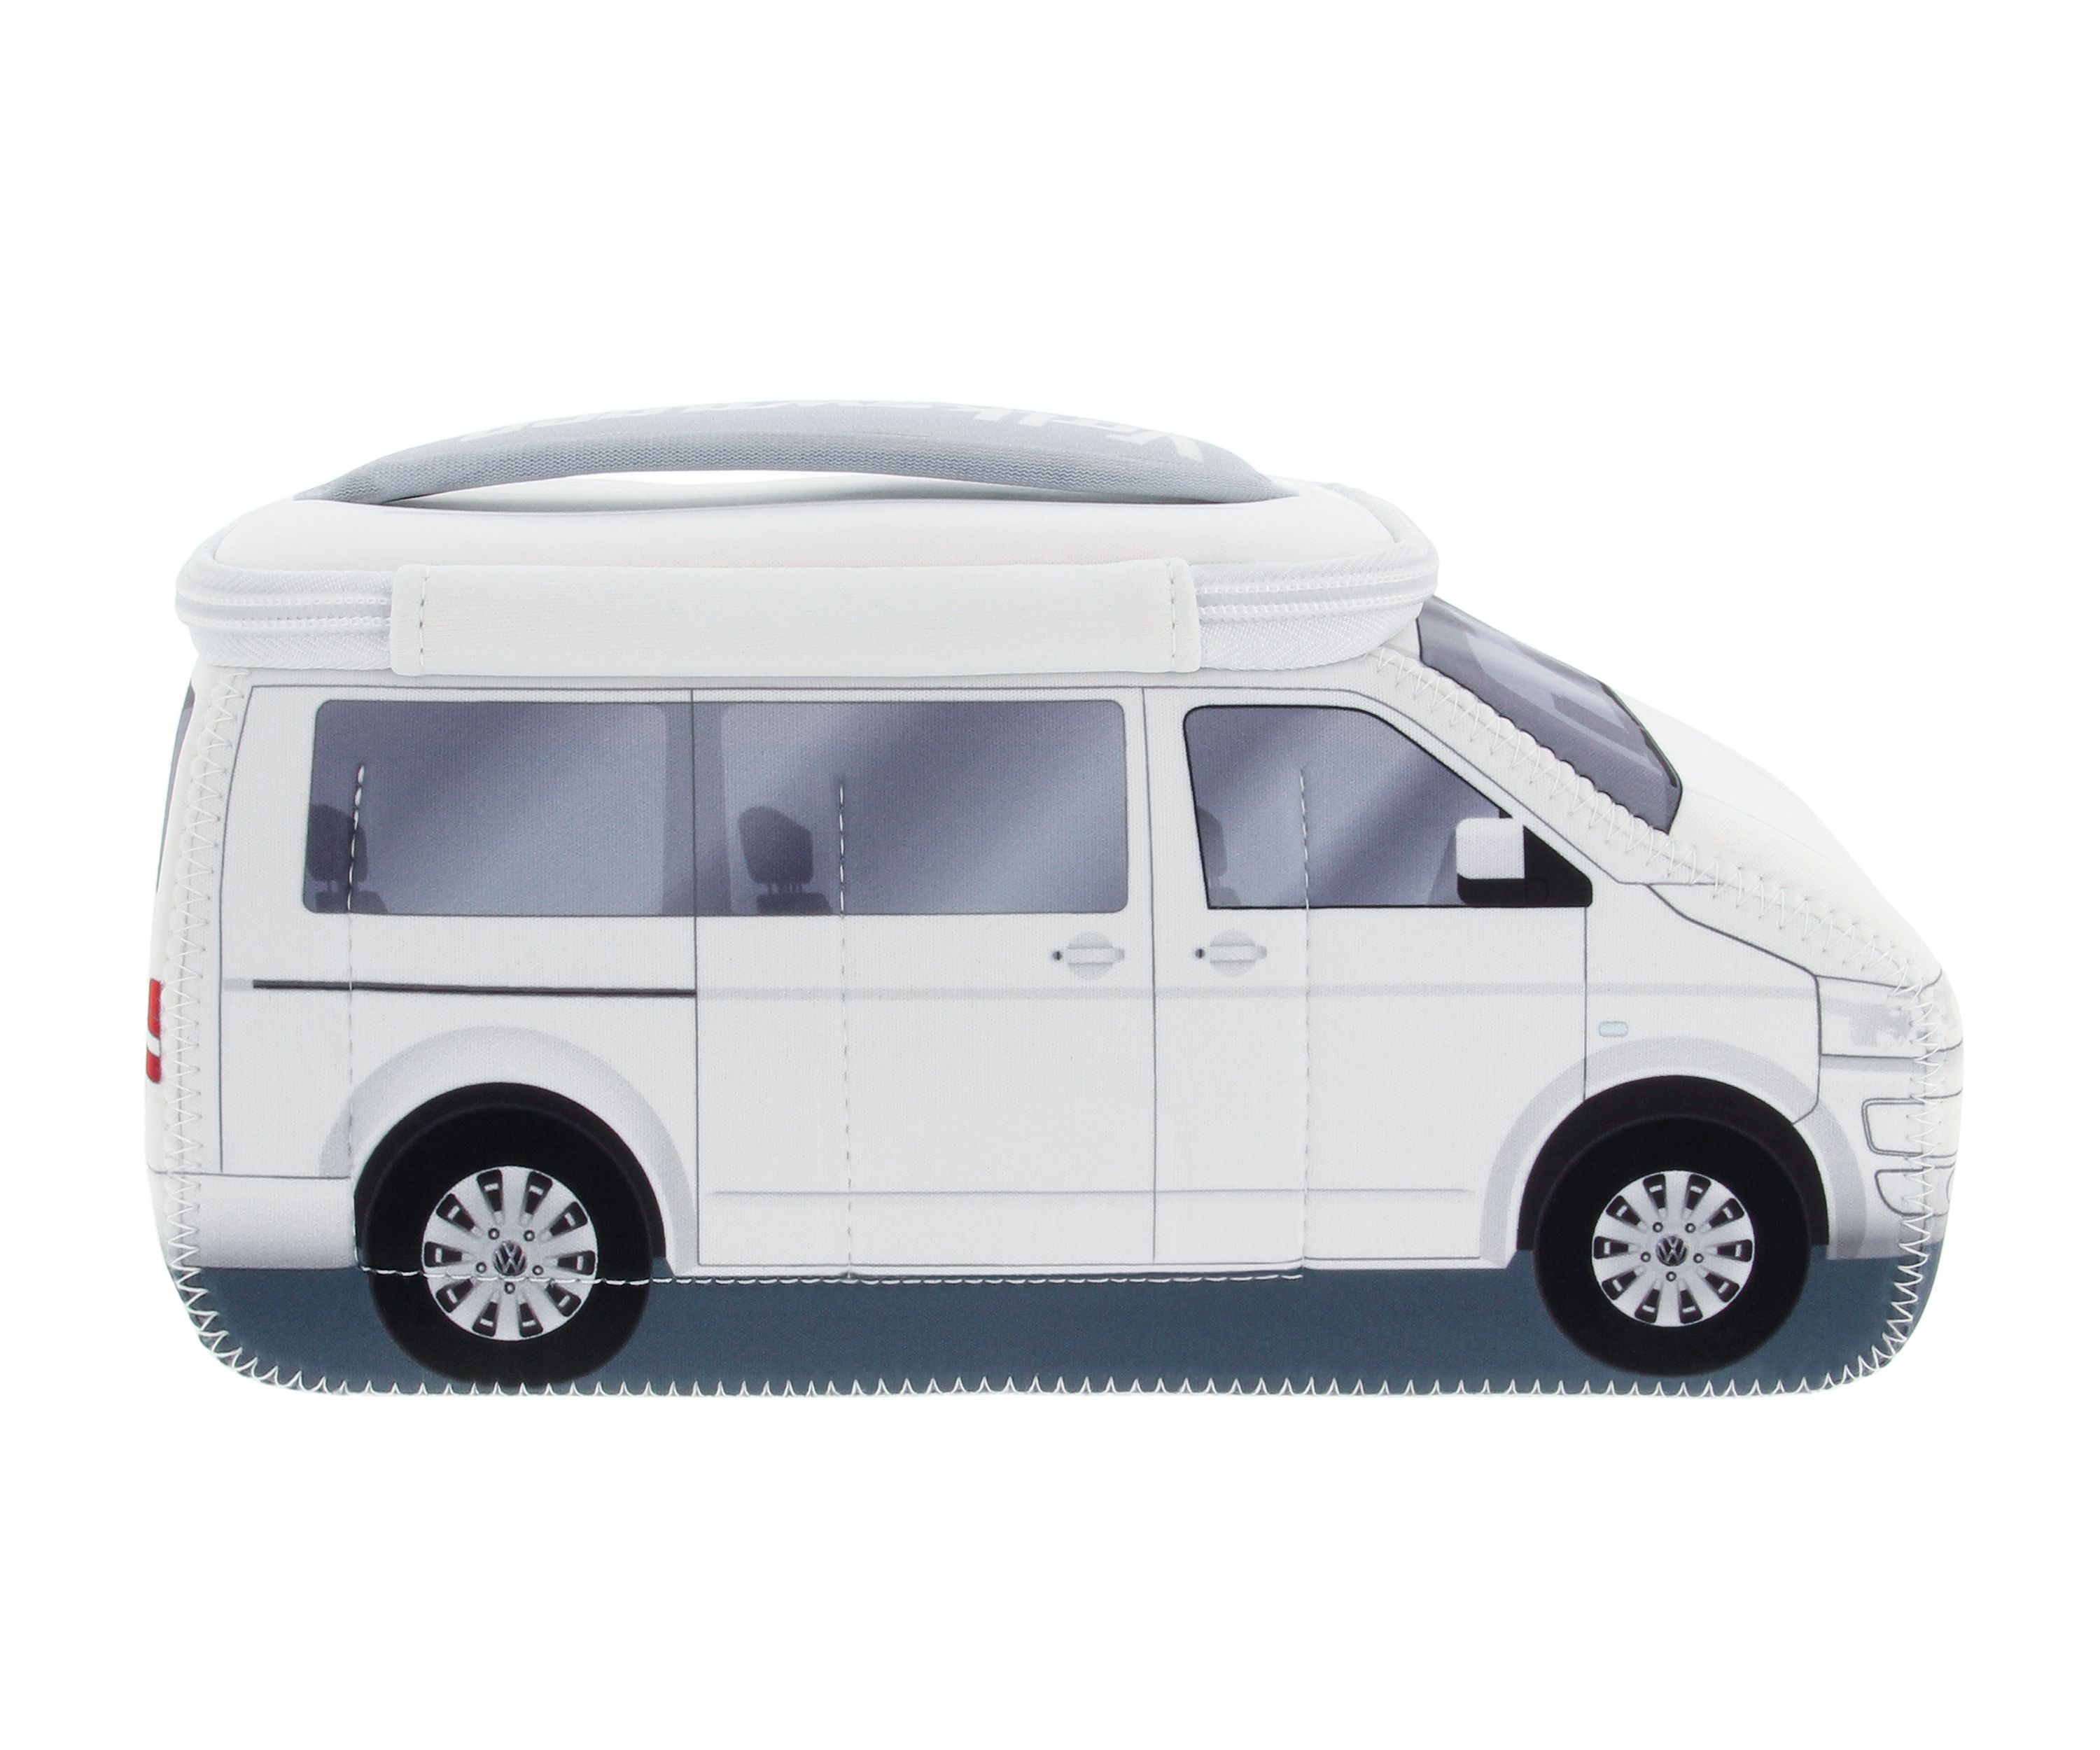 VOLKSWAGEN BUS VW T5 Combi 3D Néoprène Sac universel - blanc